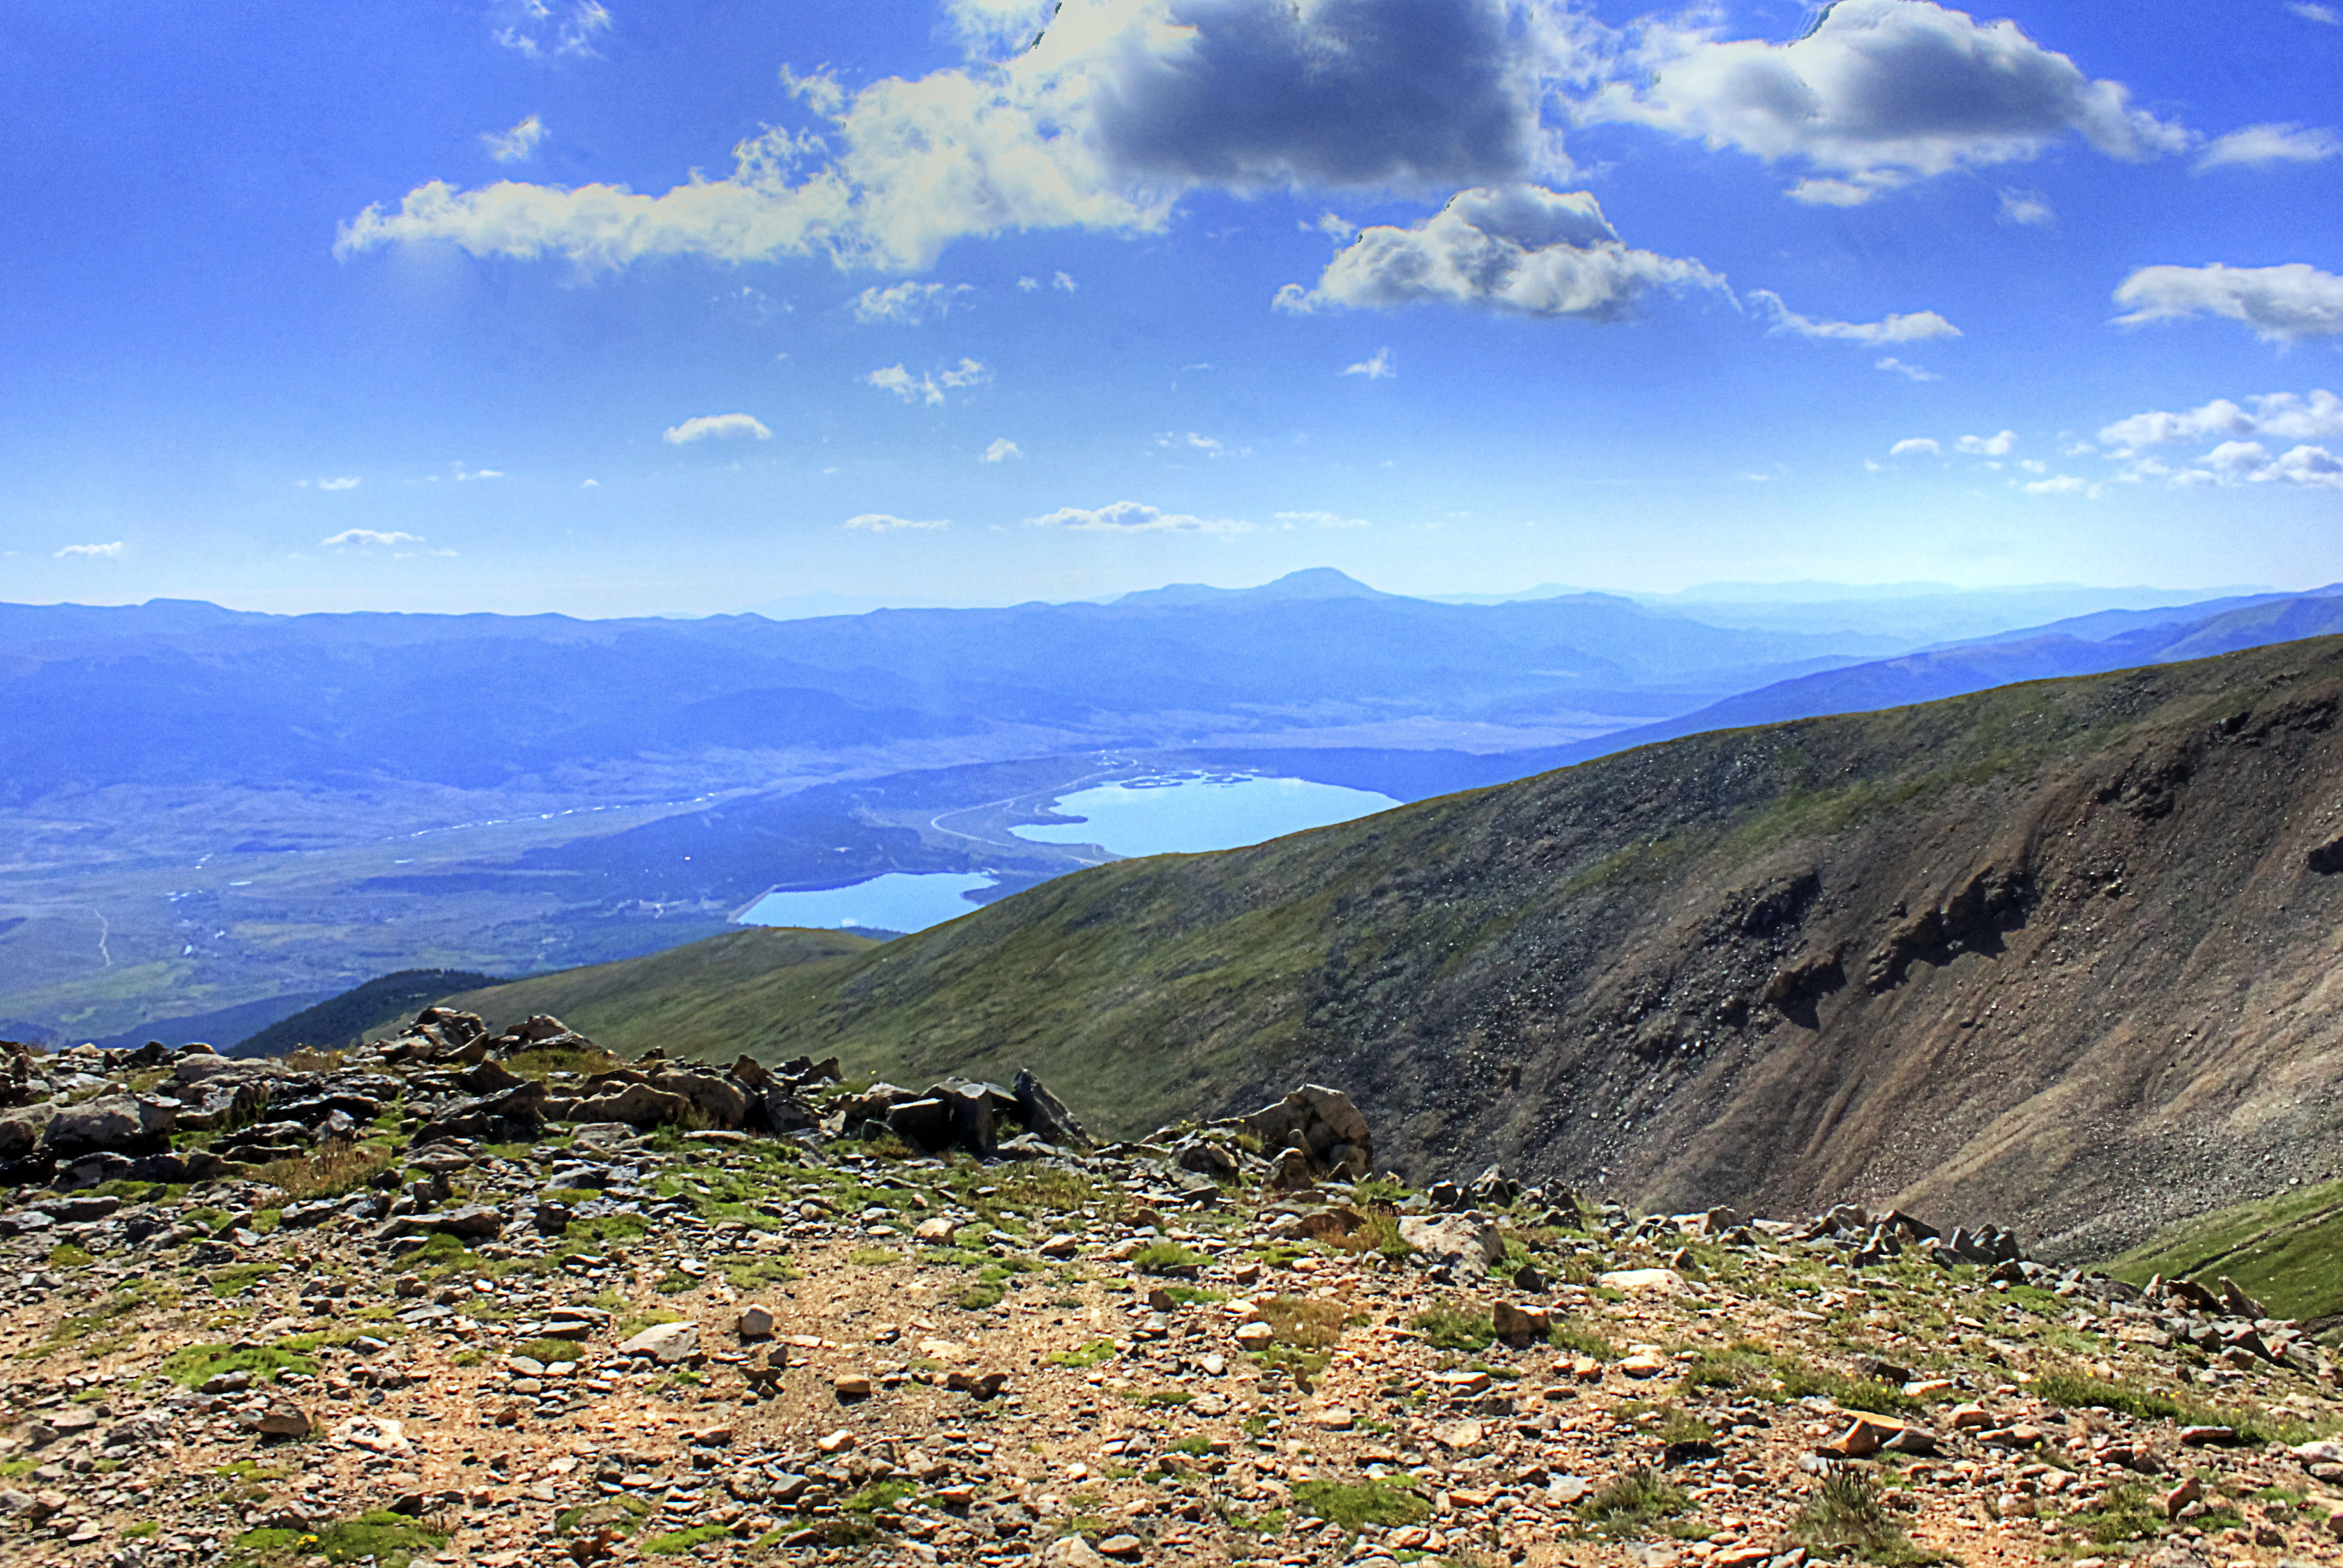 Looking into the Valley at Mount Elbert, Colorado image - Free stock ...